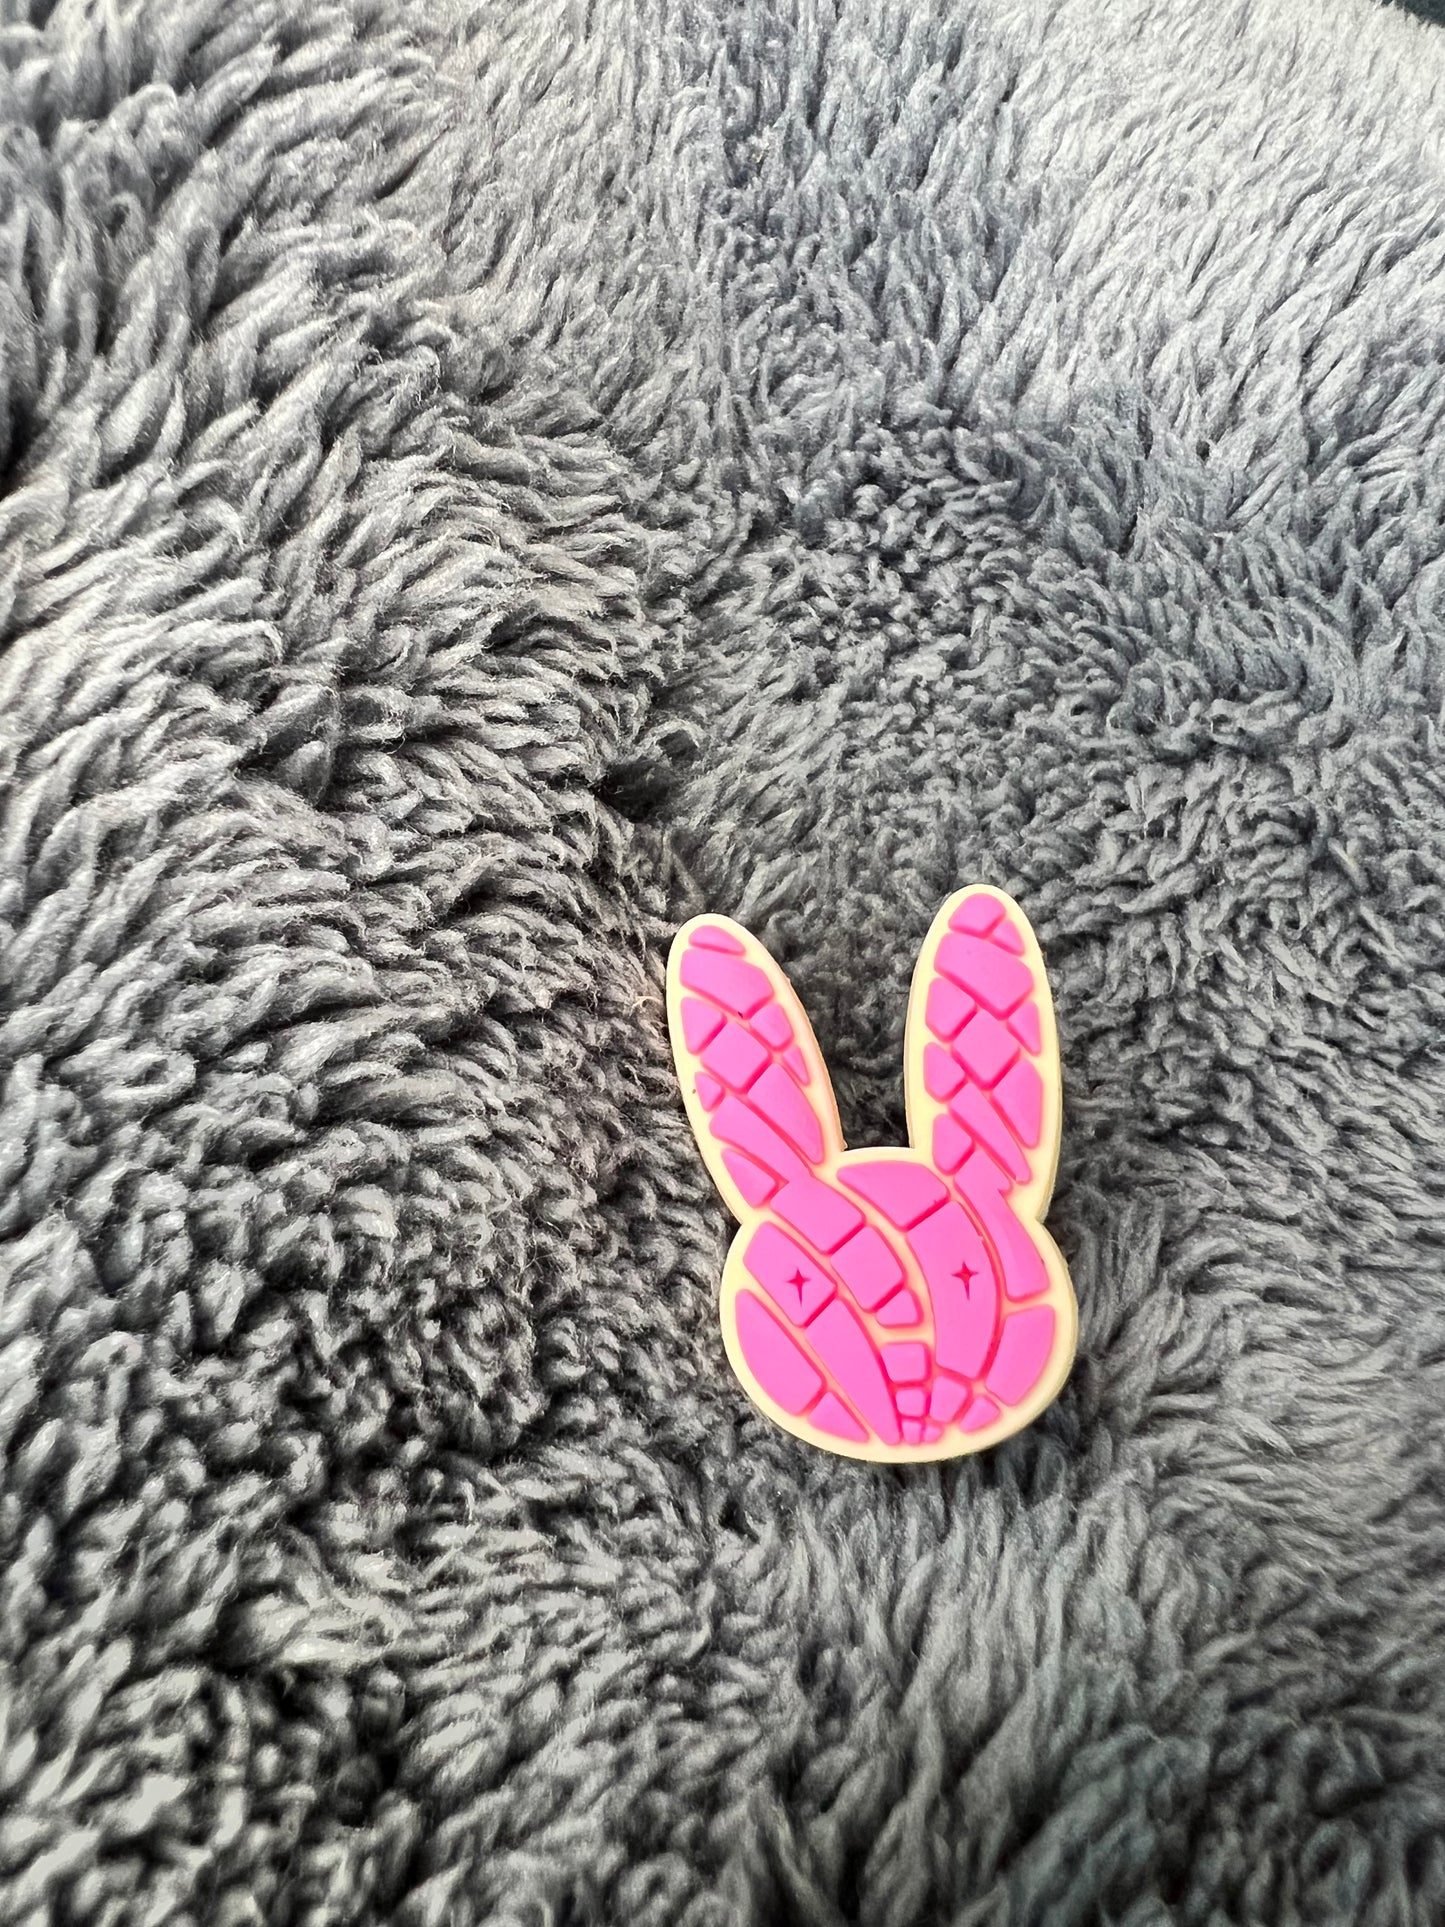 Pink Bad Bunny